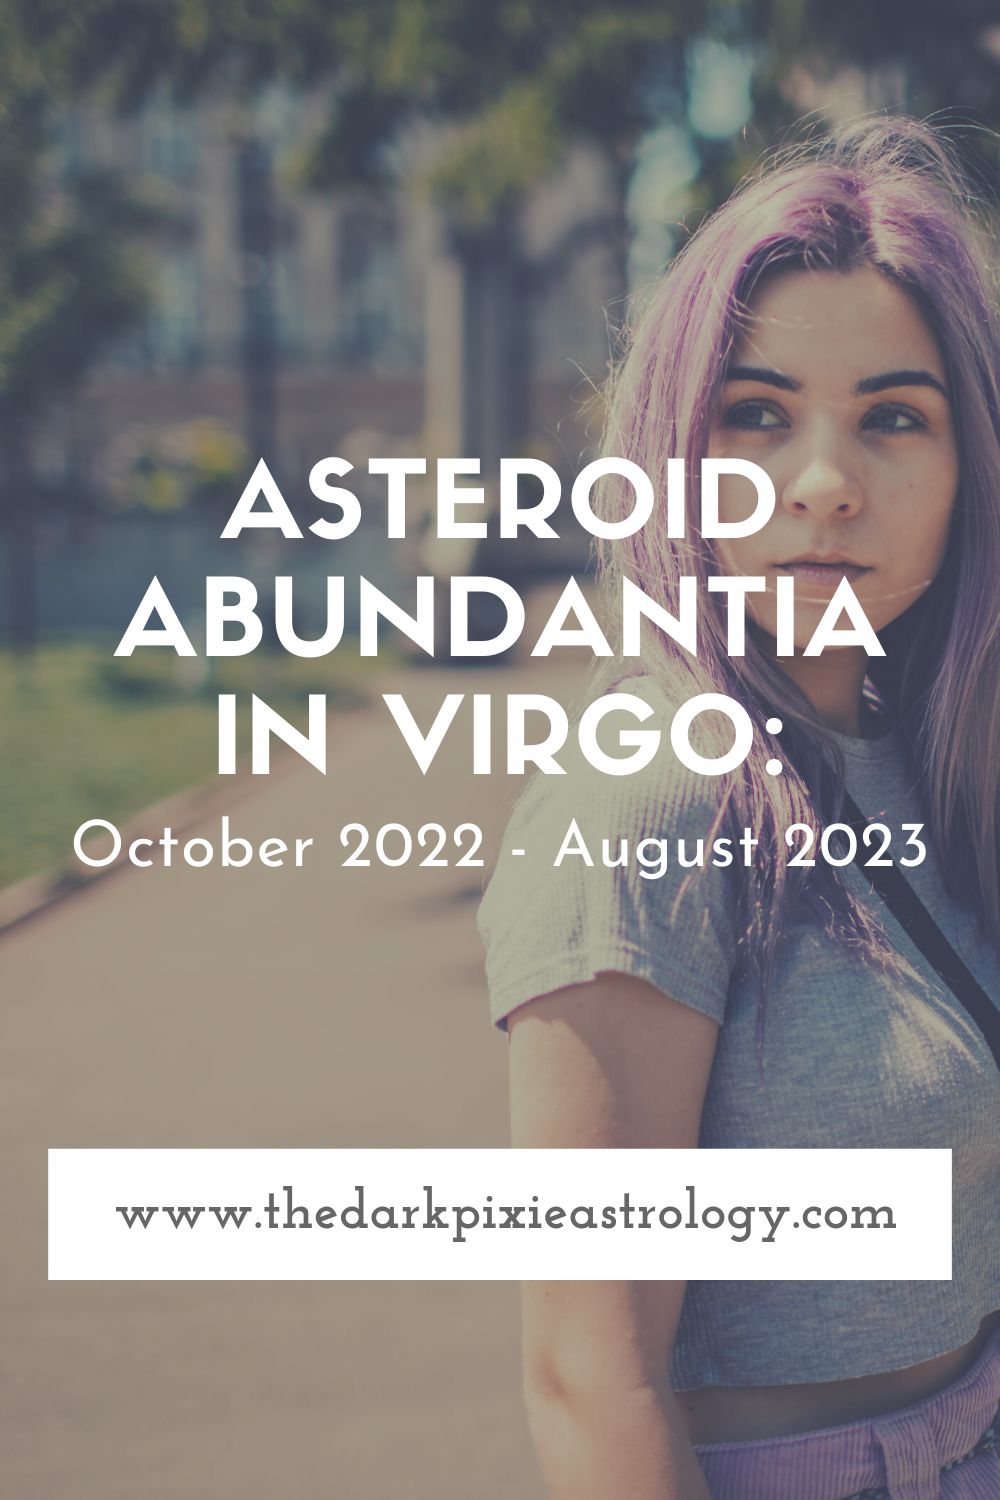 Asteroid Abundantia in Virgo: October 2022 - August 2023 - The Dark Pixie Astrology